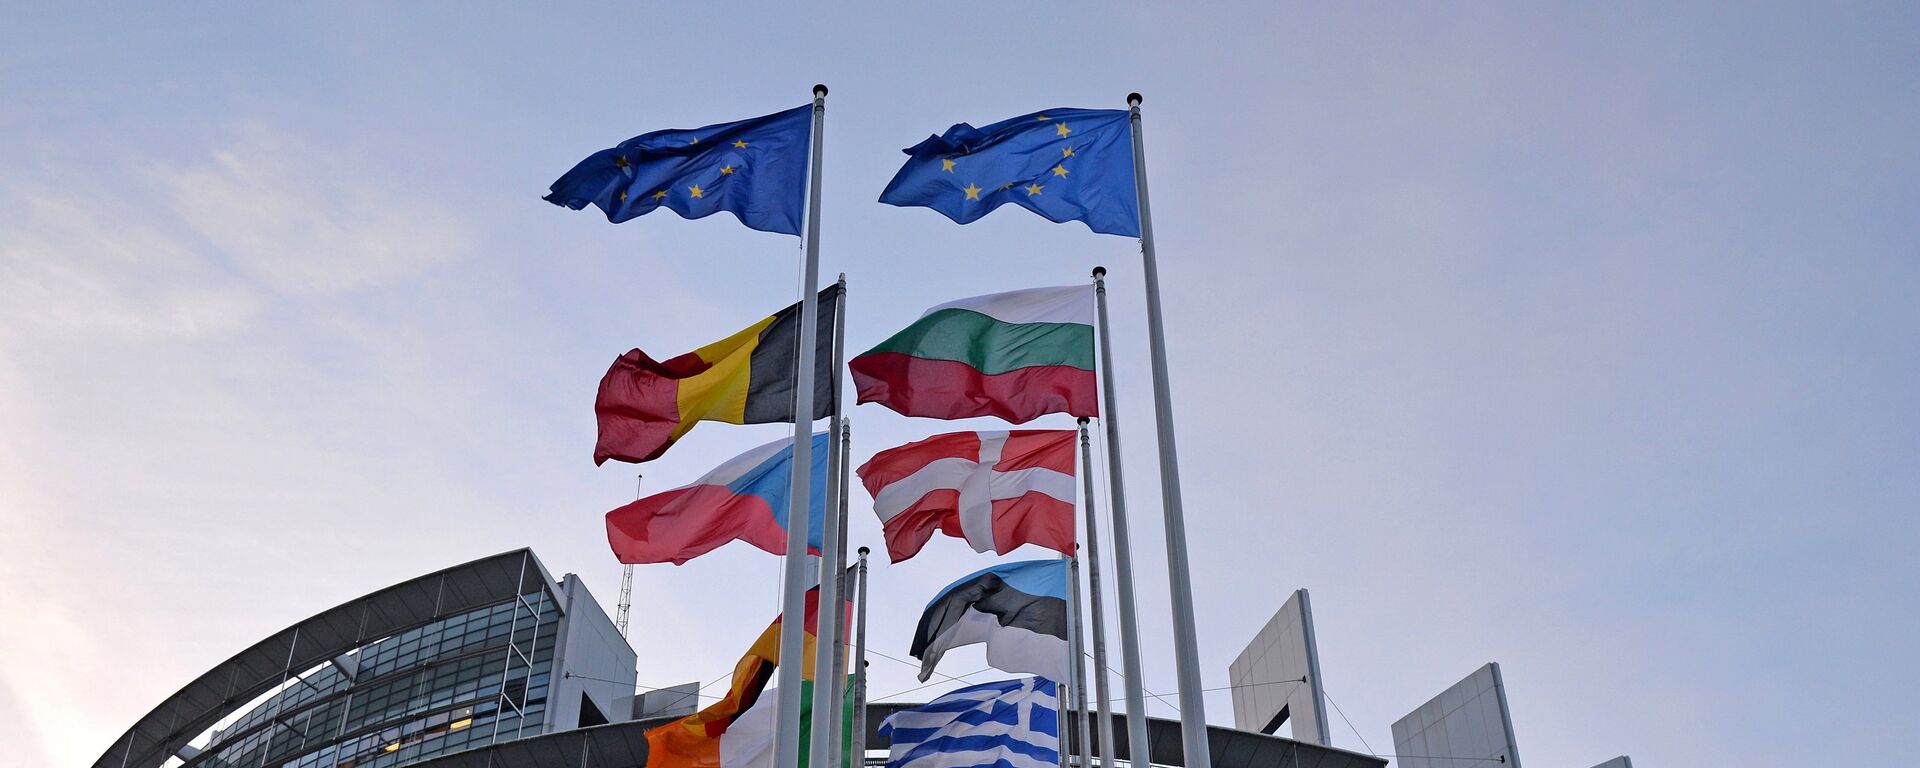 Zastave evropskih država ispred zgrade Evropskog parlamenta u Strazburu - Sputnik Srbija, 1920, 12.01.2022